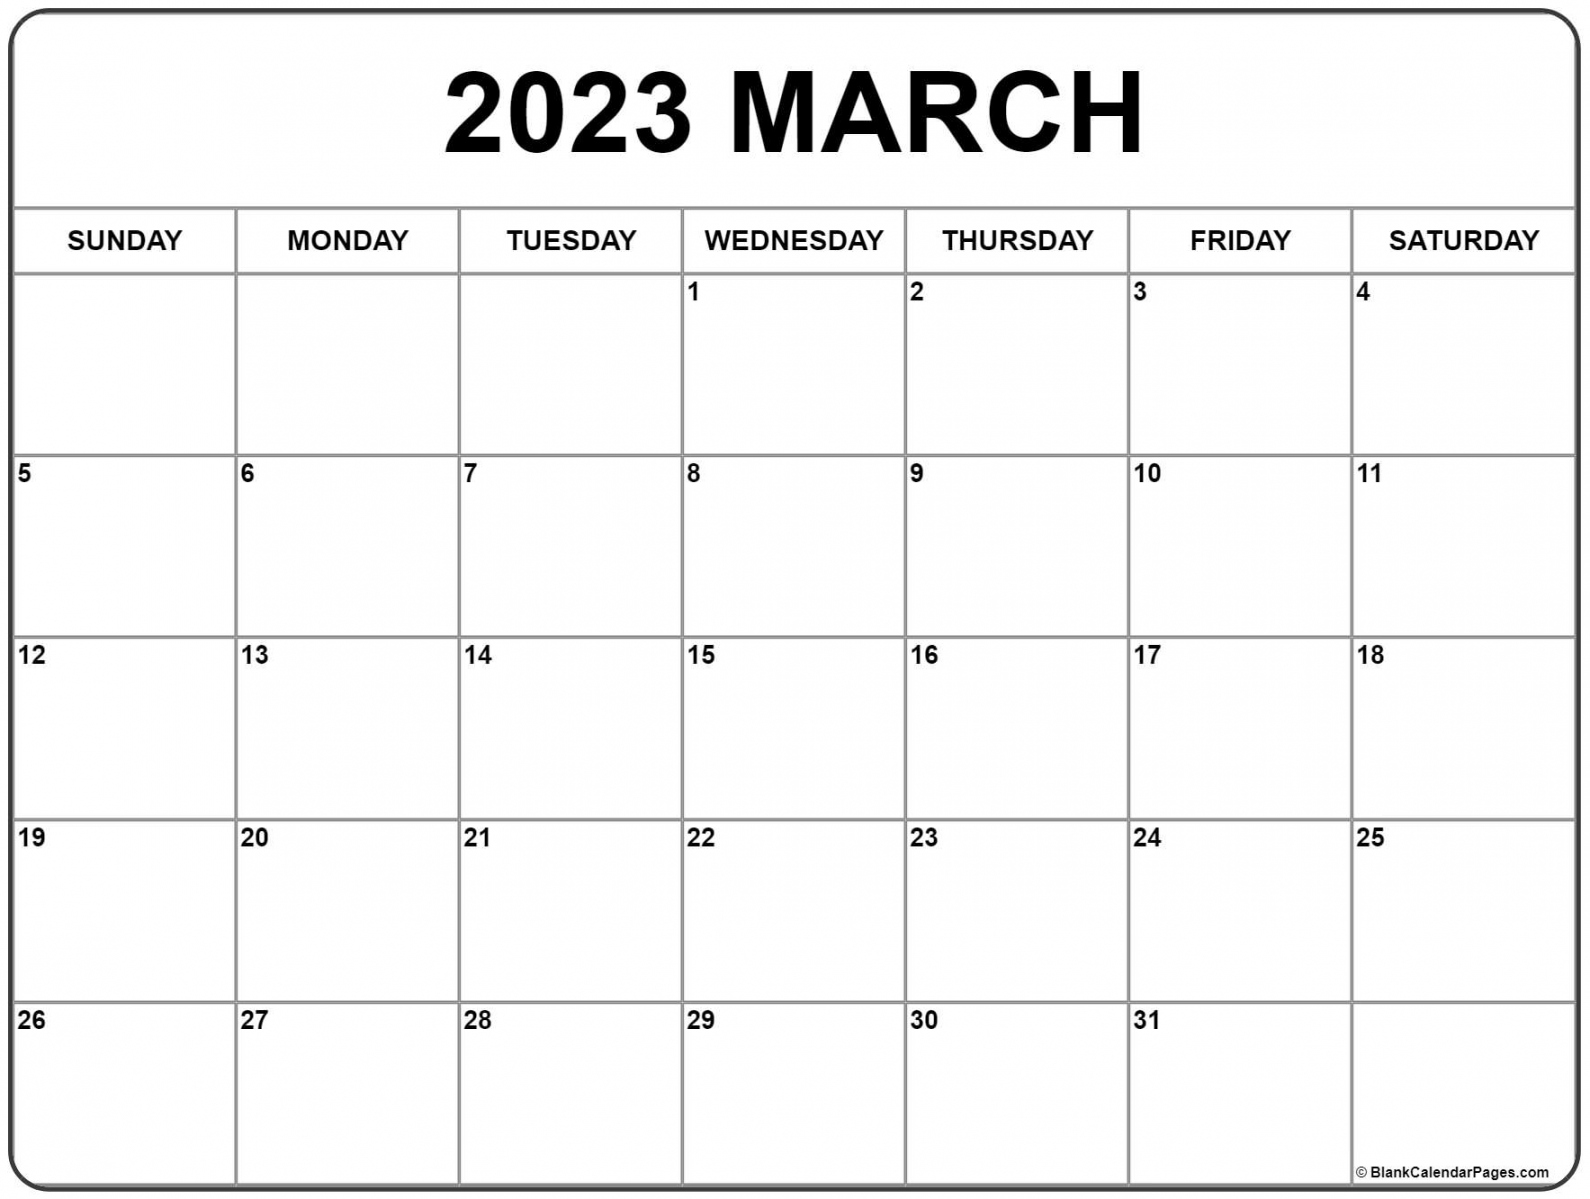 Free March Calendar Printable - Printable - March  calendar  free printable calendar